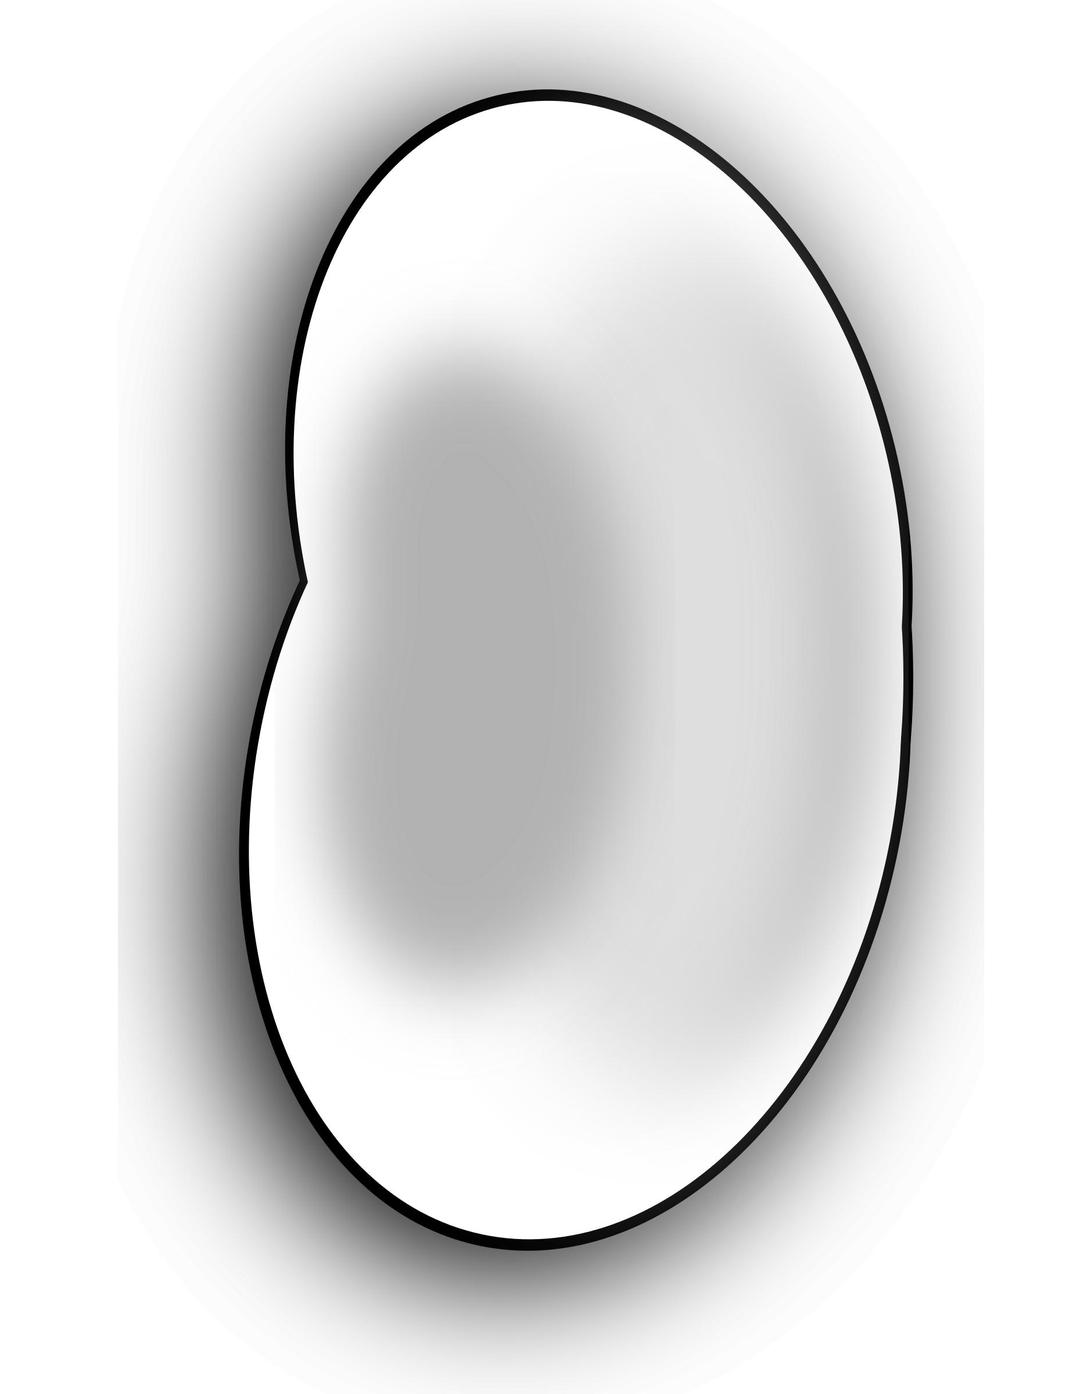 A bean png transparent